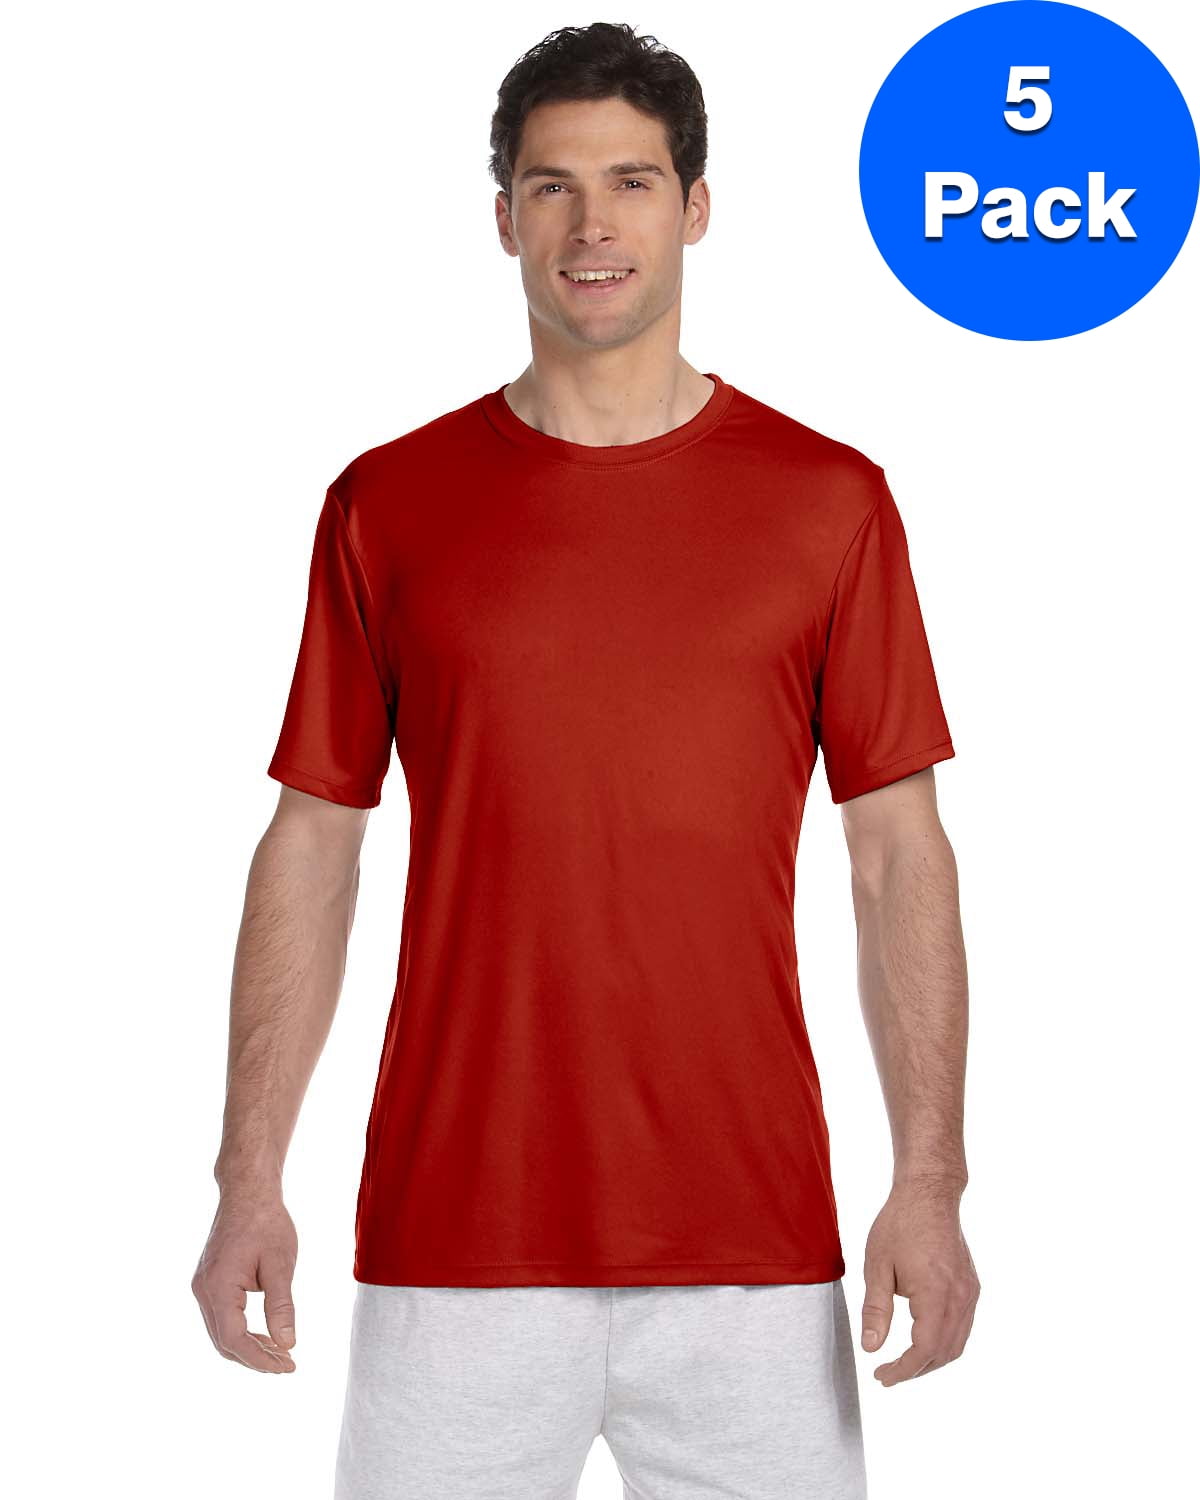 Mens Cool DRI TAGLESS Men's T-Shirt 4820 (5 PACK) - Walmart.com